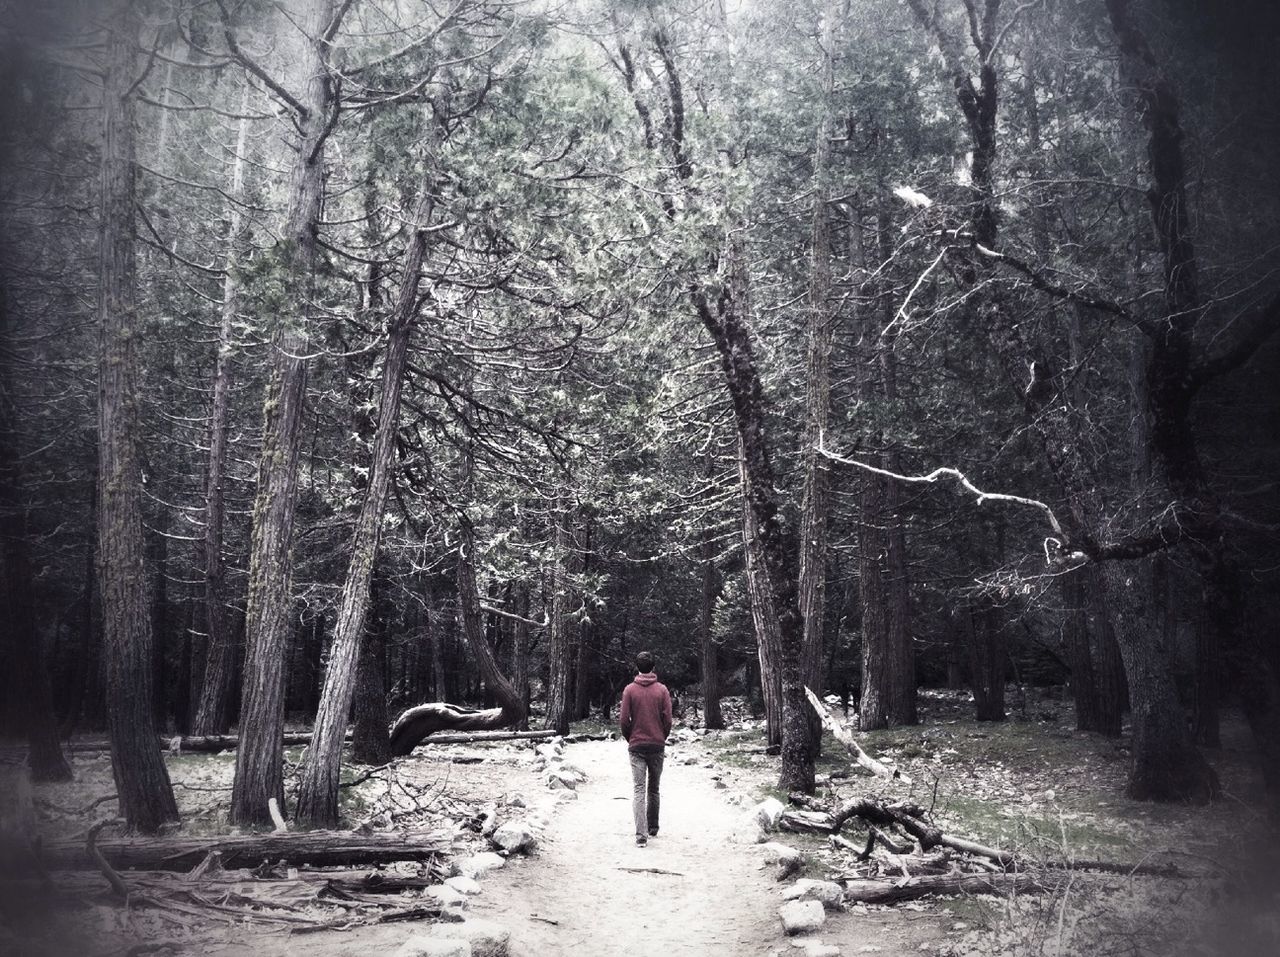 A young man walks through a winter forest